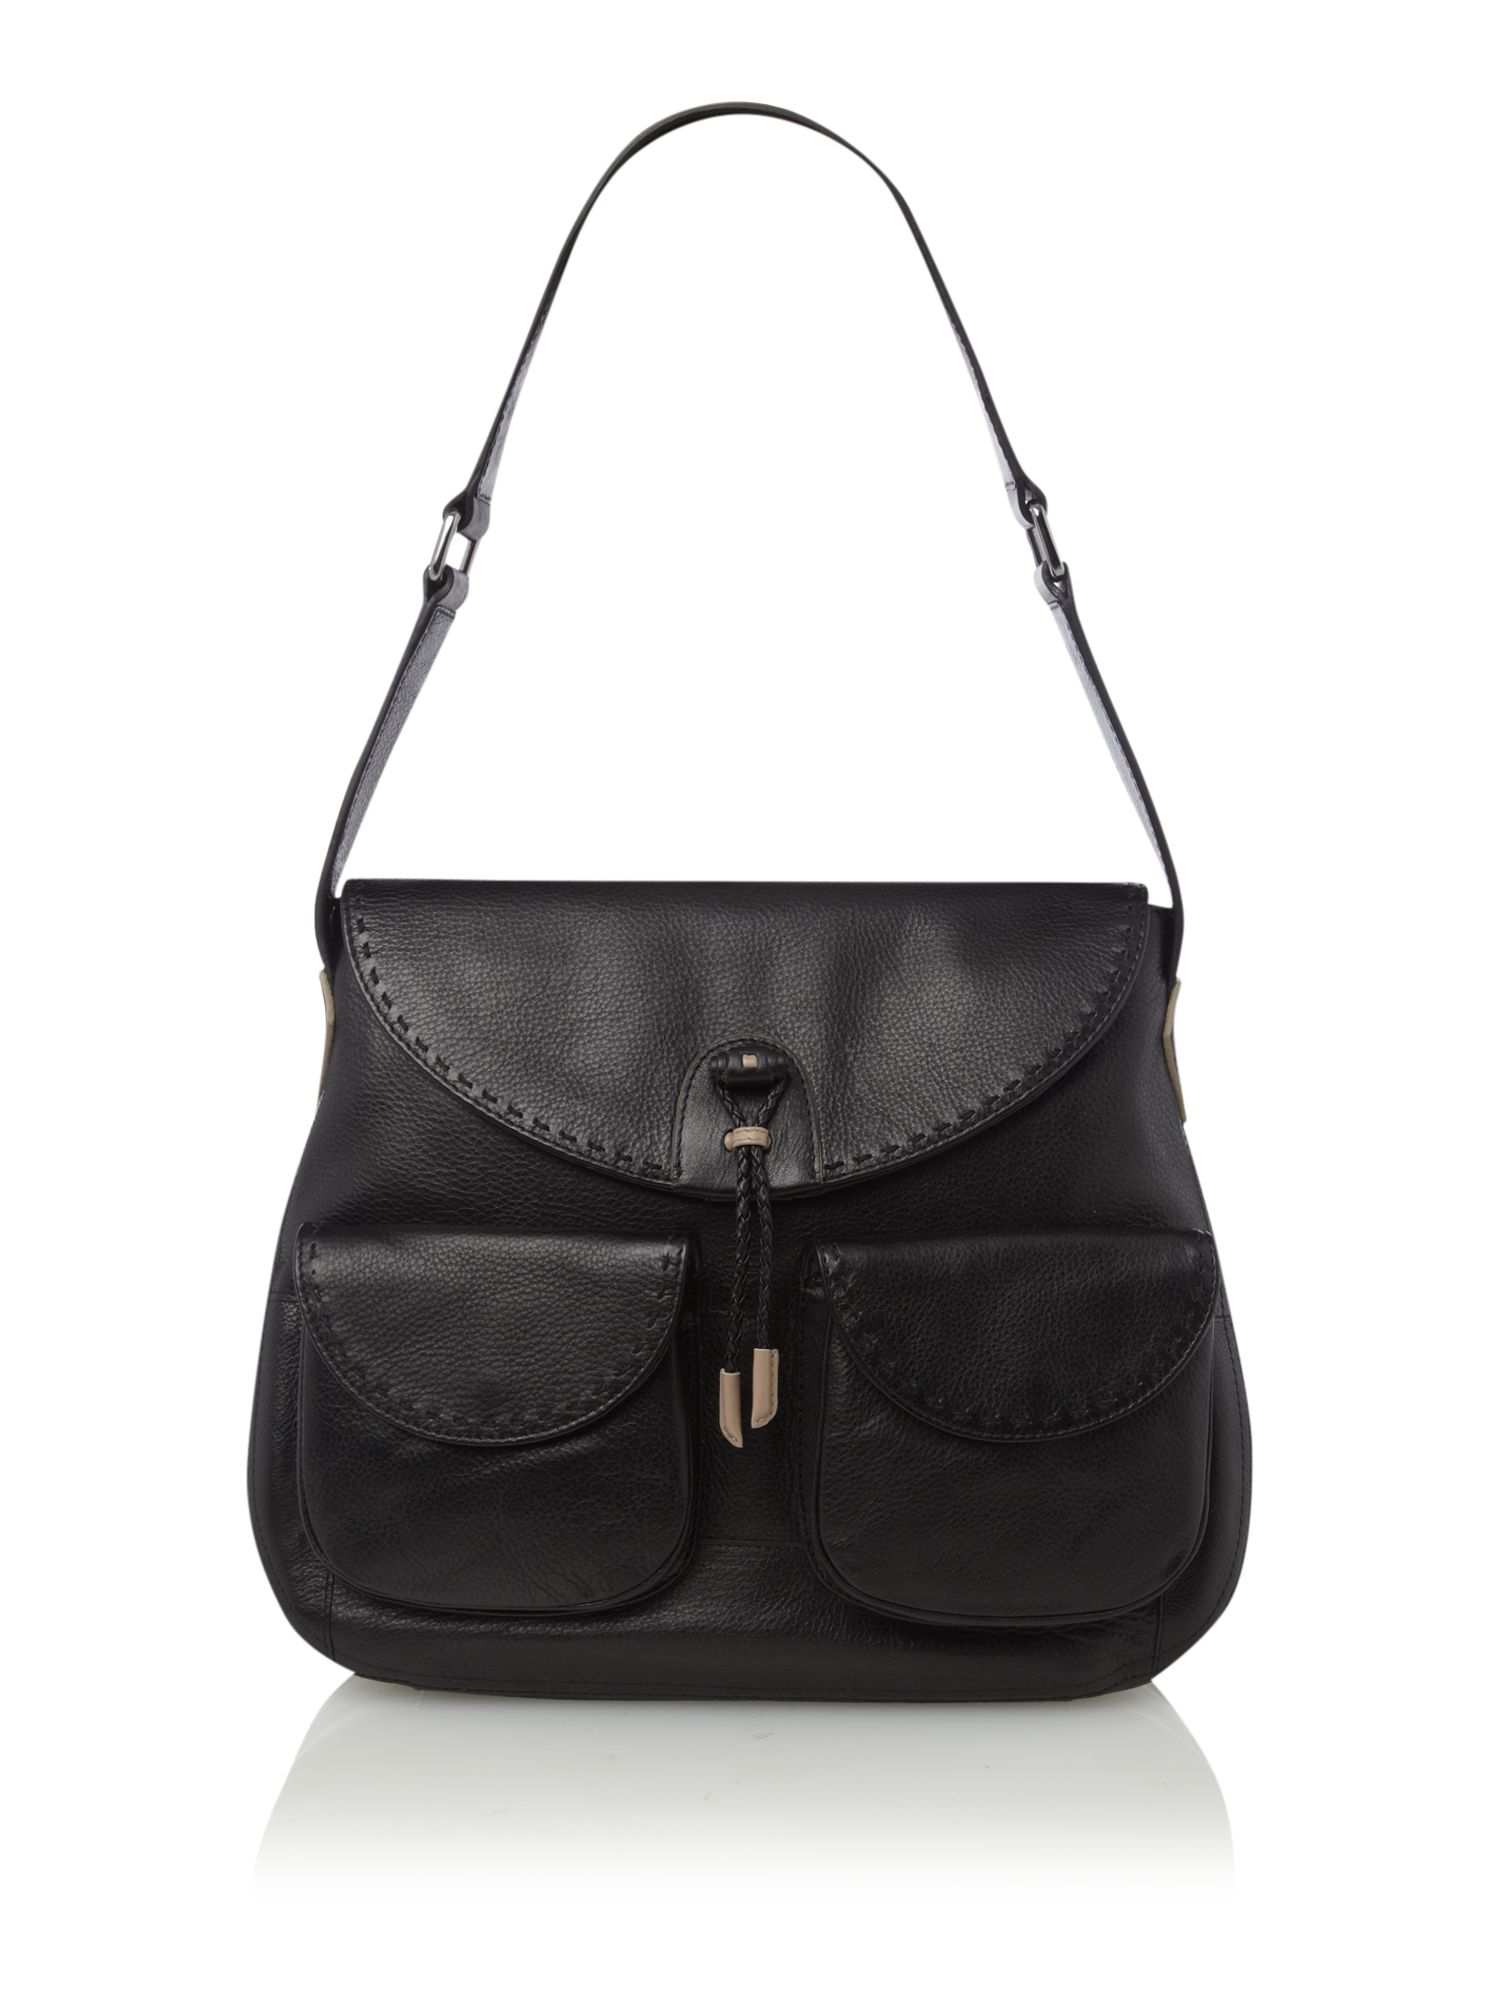 Radley Large Hobo Bag in Black | Lyst